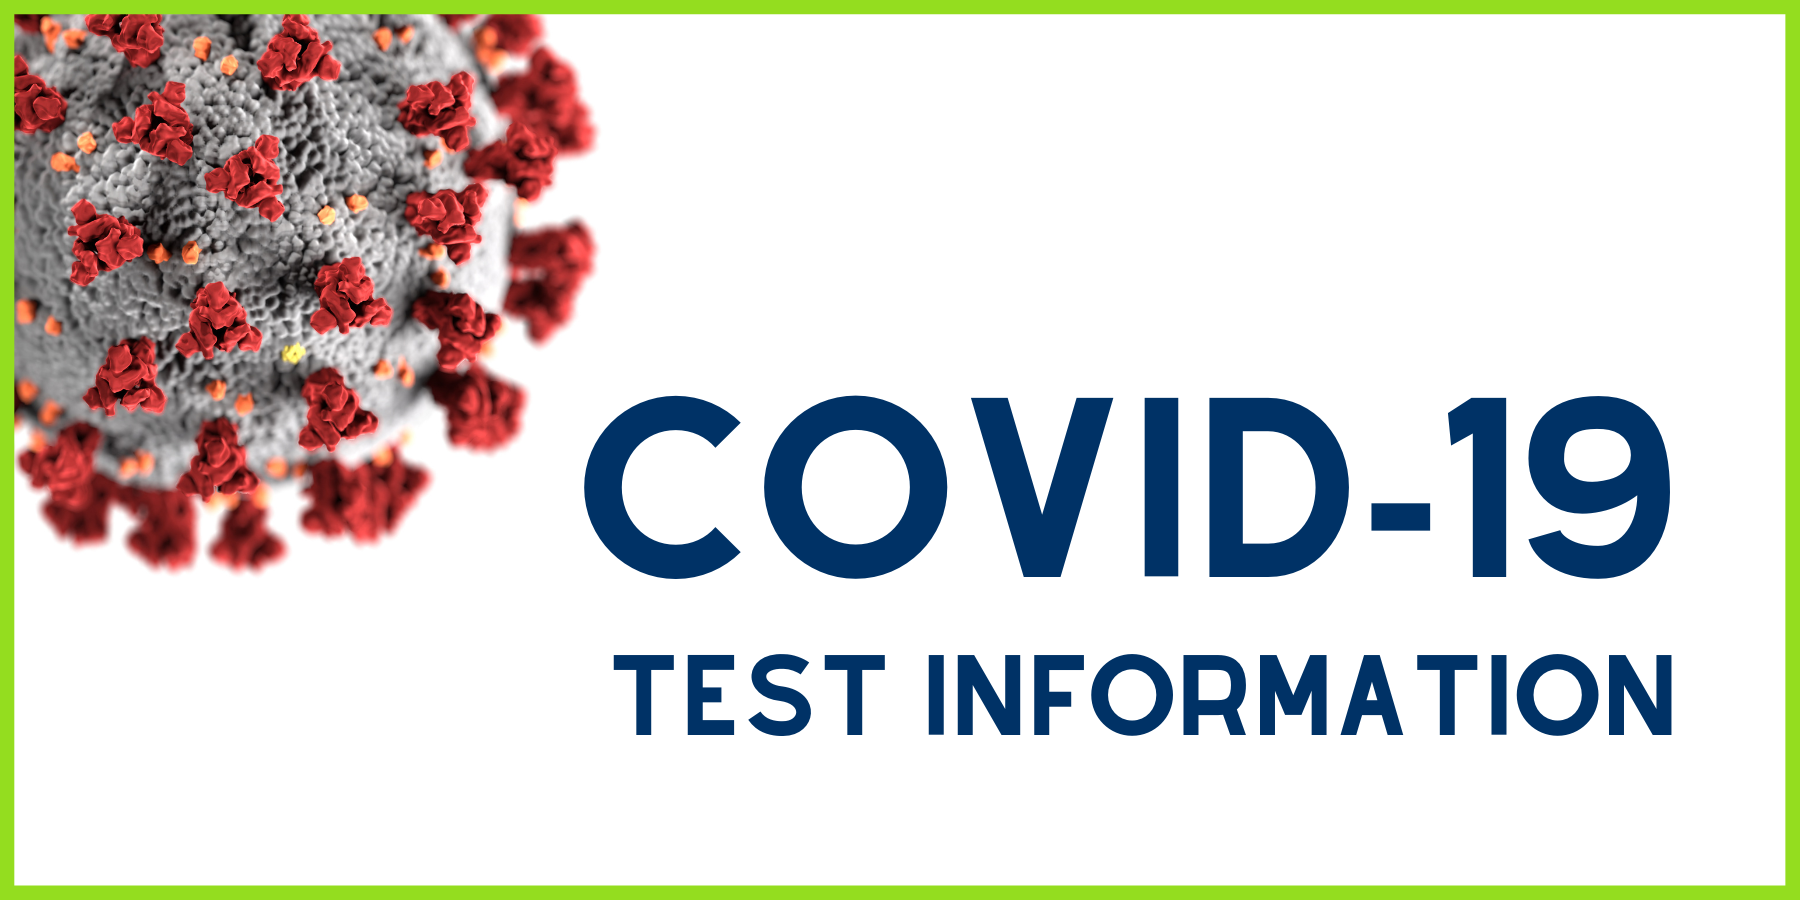 Coronavirus testing information banner